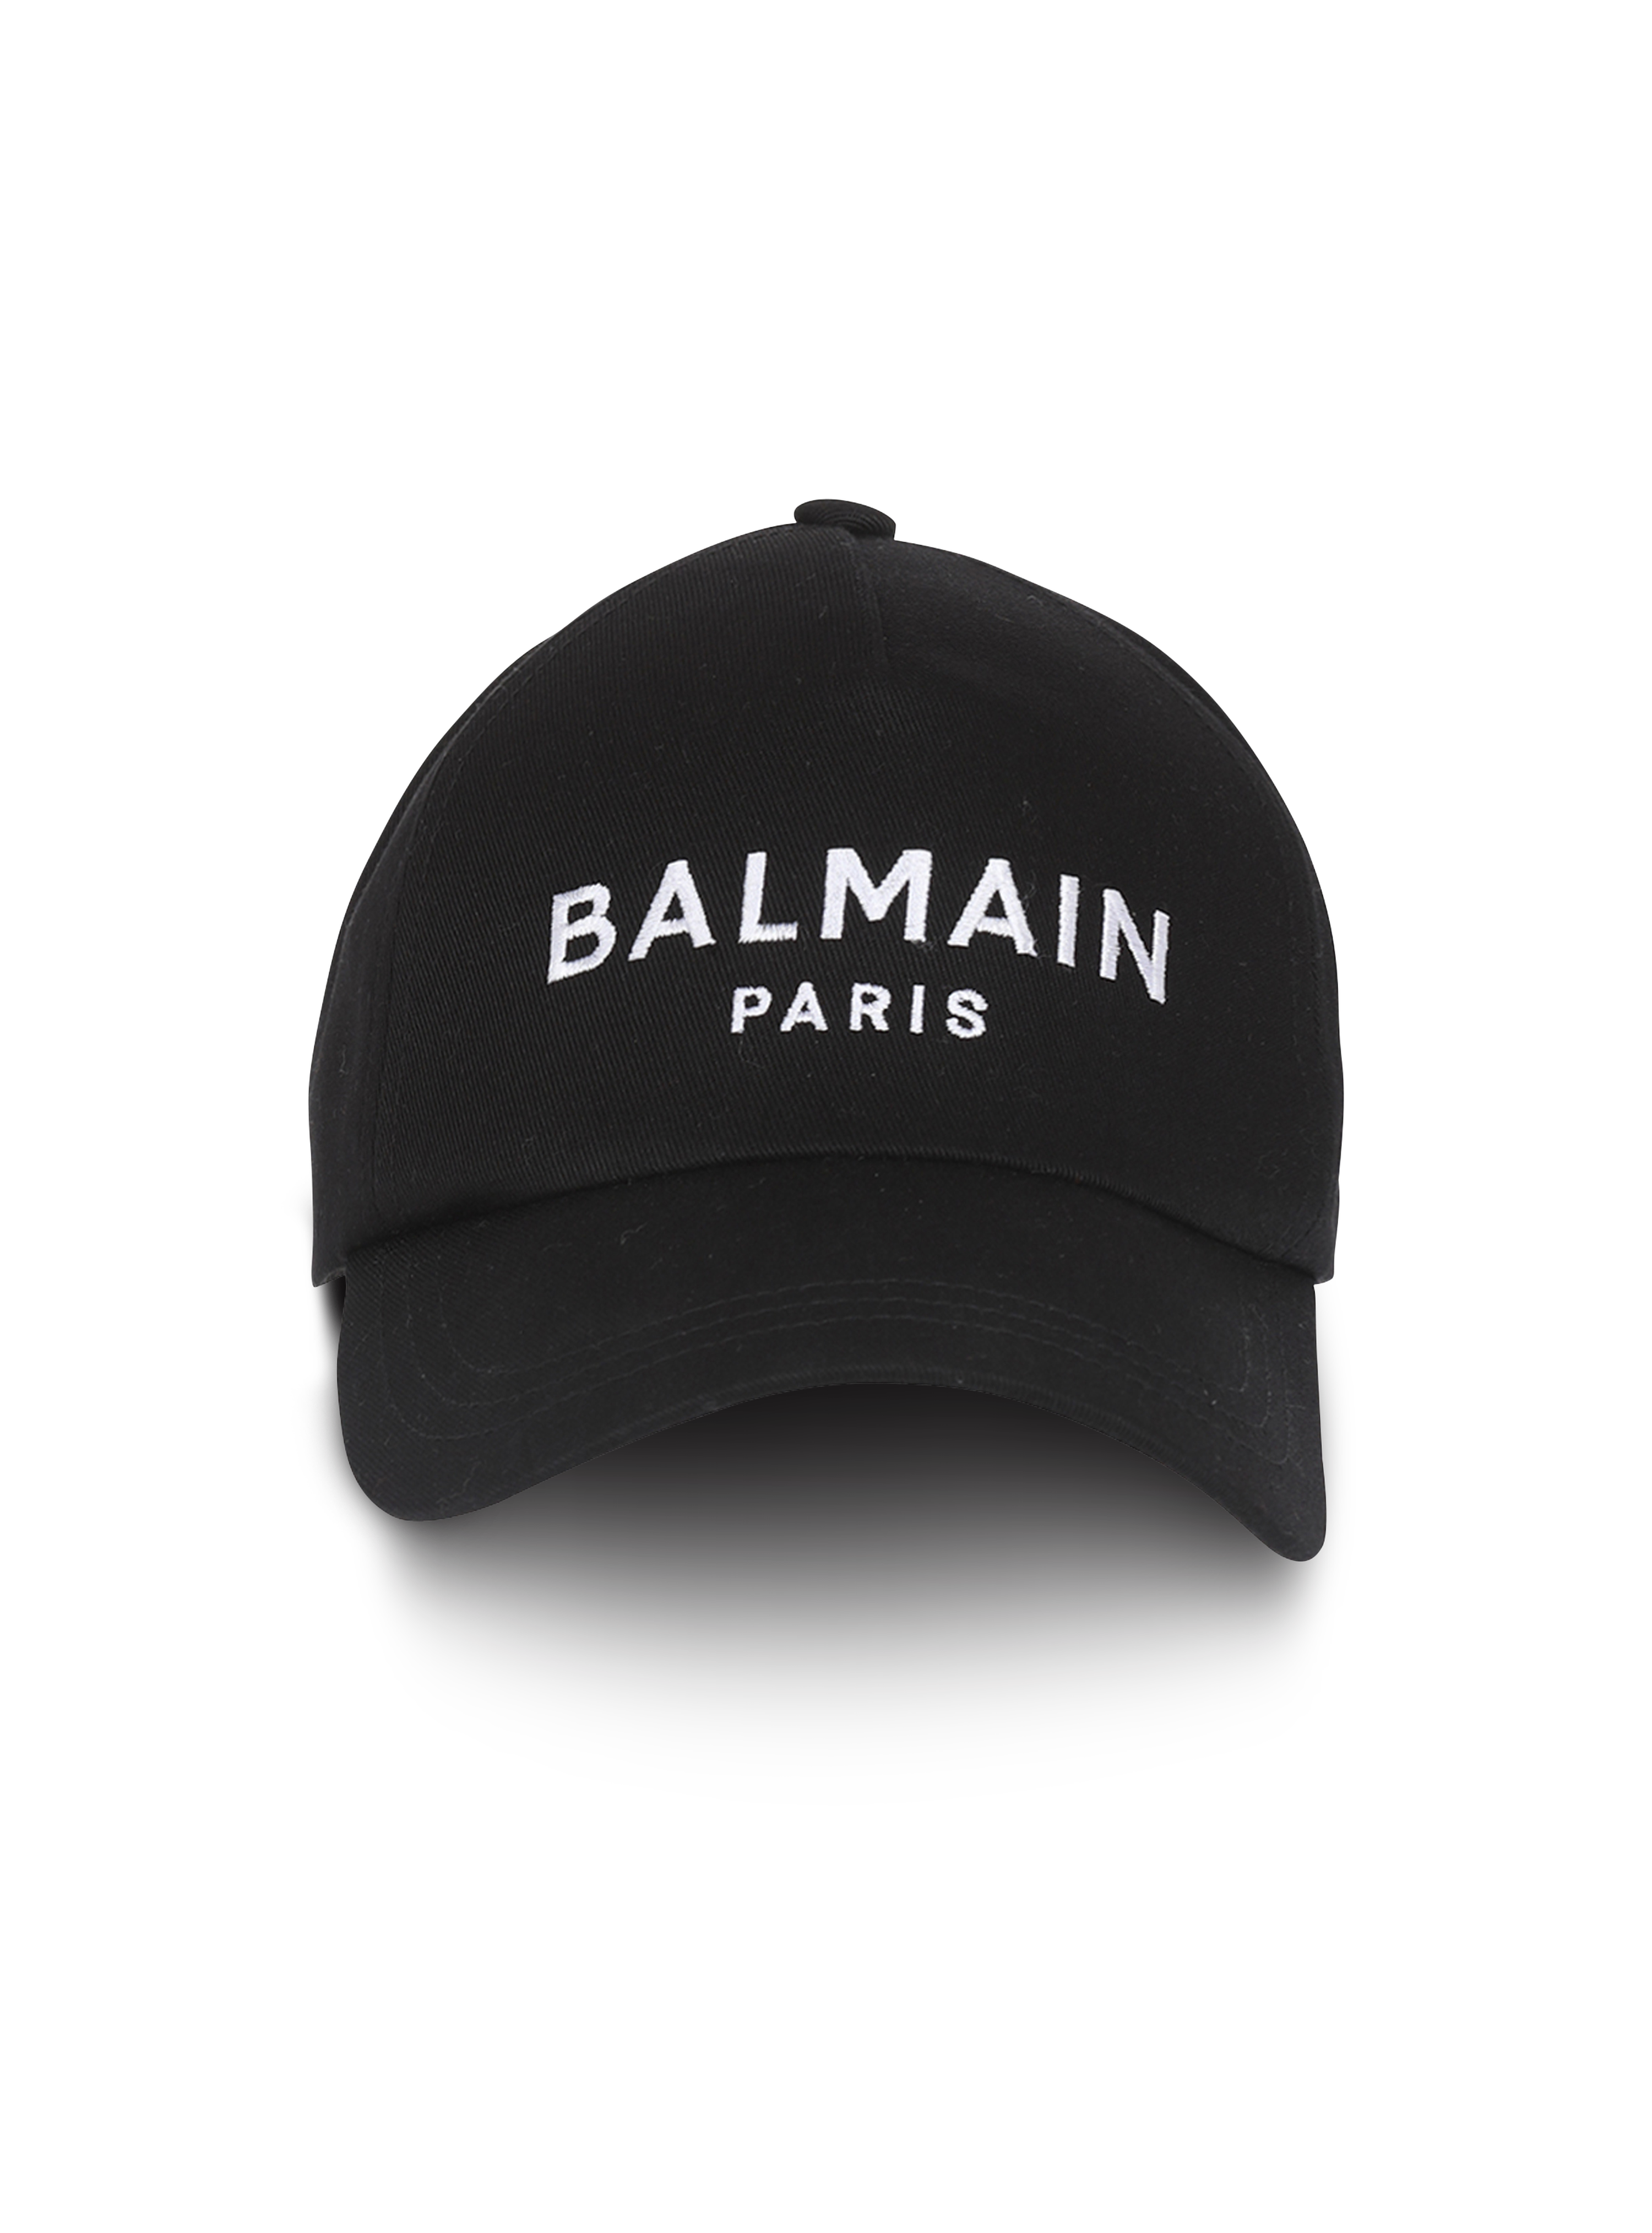 Cappellino in cotone con logo Balmain Paris, nero